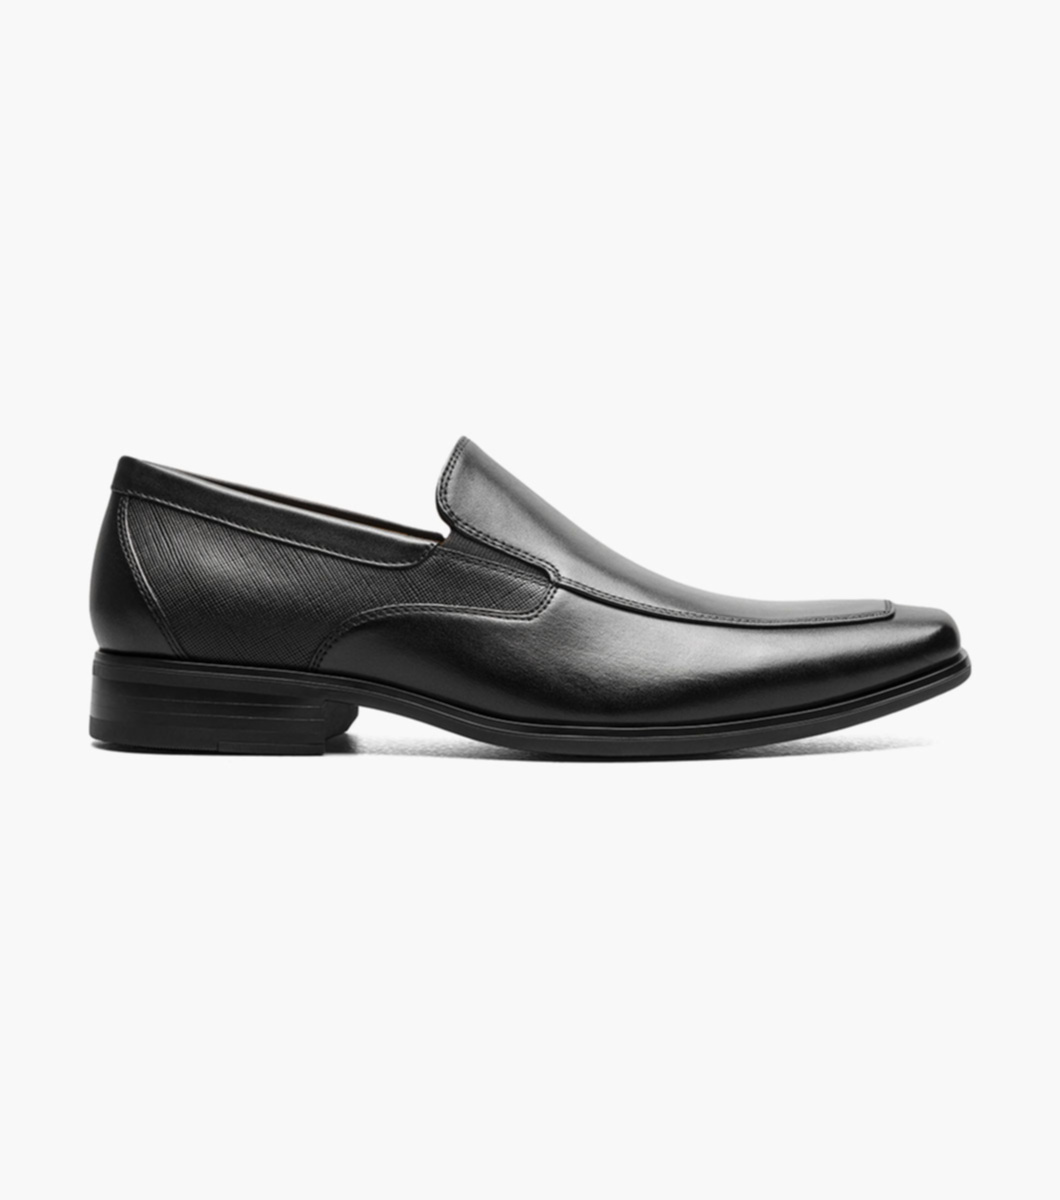 Jackson Moc Toe Slip On Men's Dress Shoes | Florsheim.com